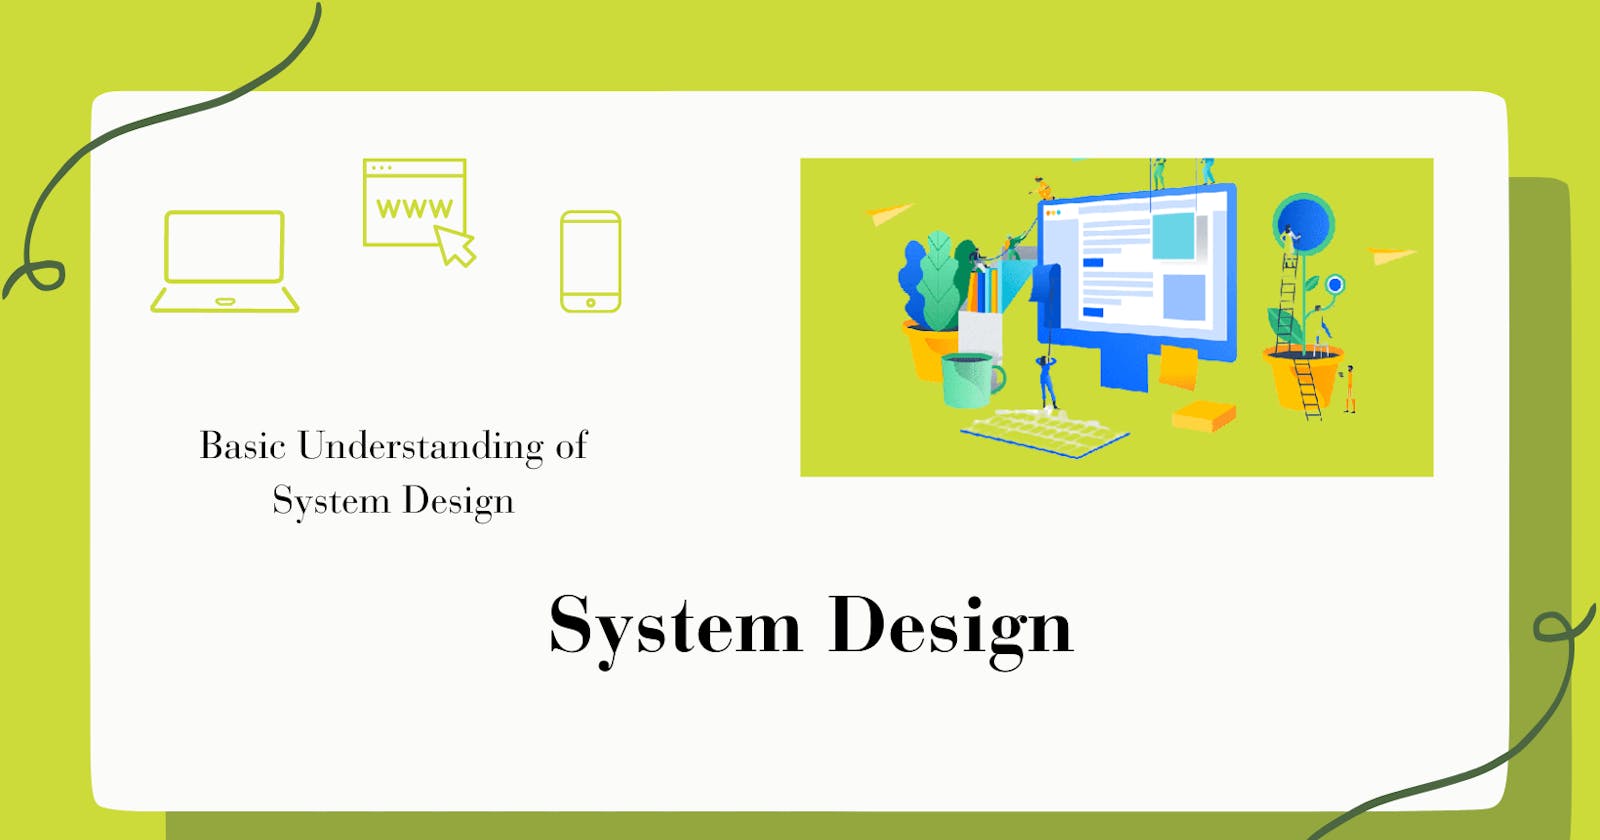 02 - System Design - Basic Understanding